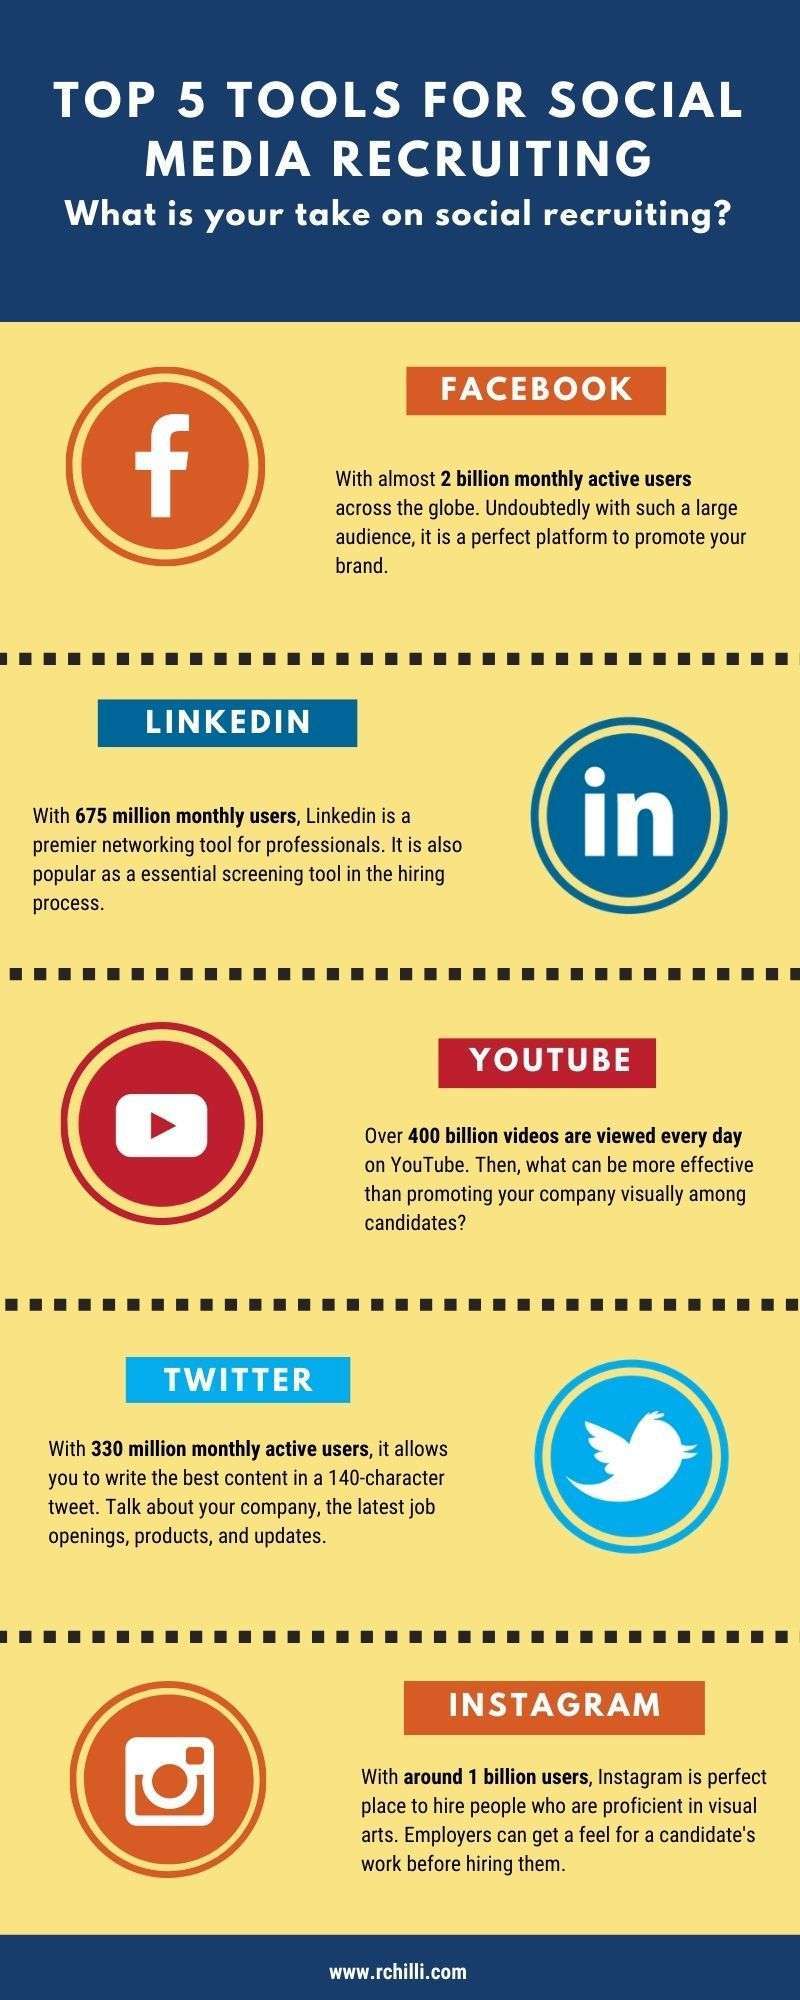 Top 5 Tools for Social Media Recruiting (1)